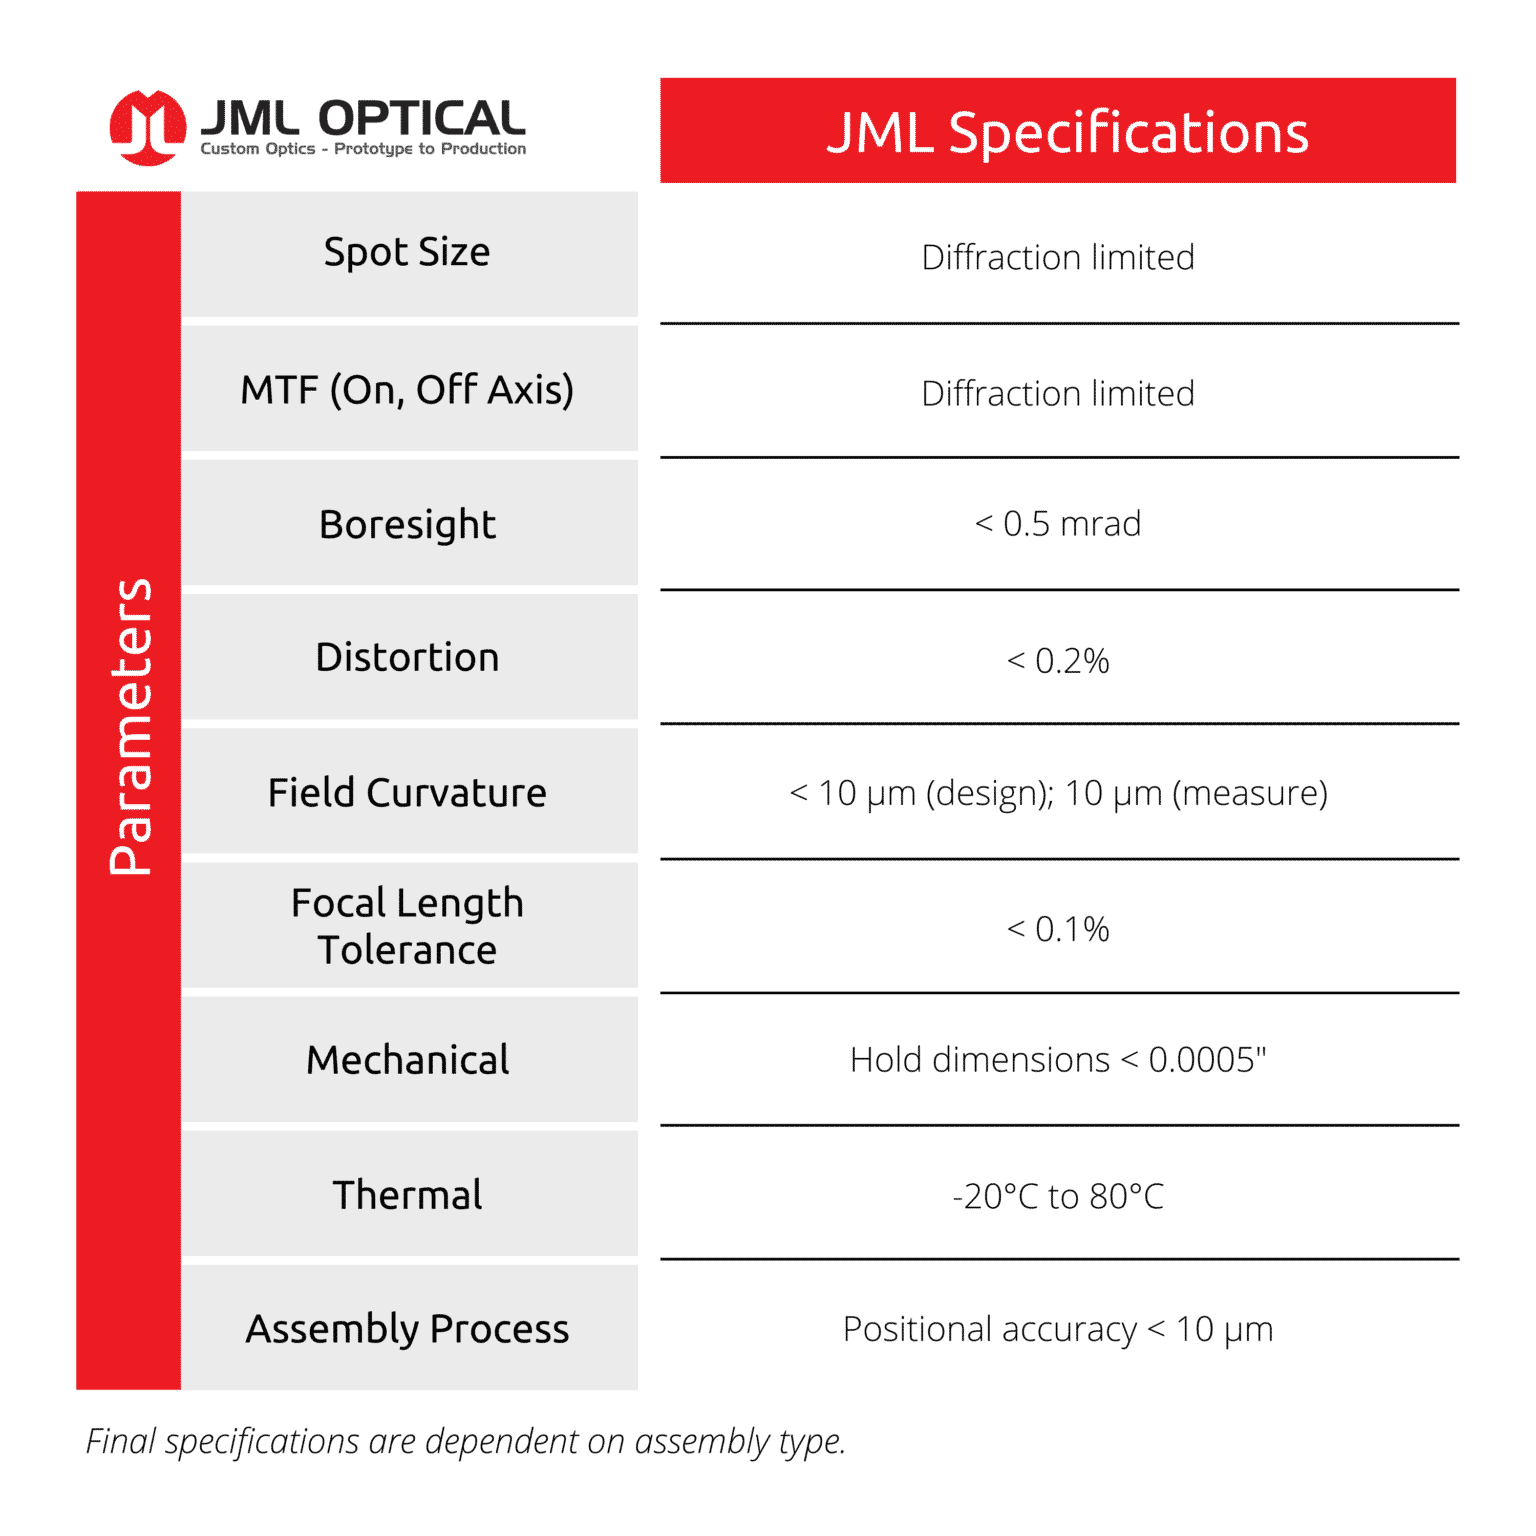 JML-Optical–Table-for-Optical-Assemblies-Pillar-Page-1-1-1536x1536